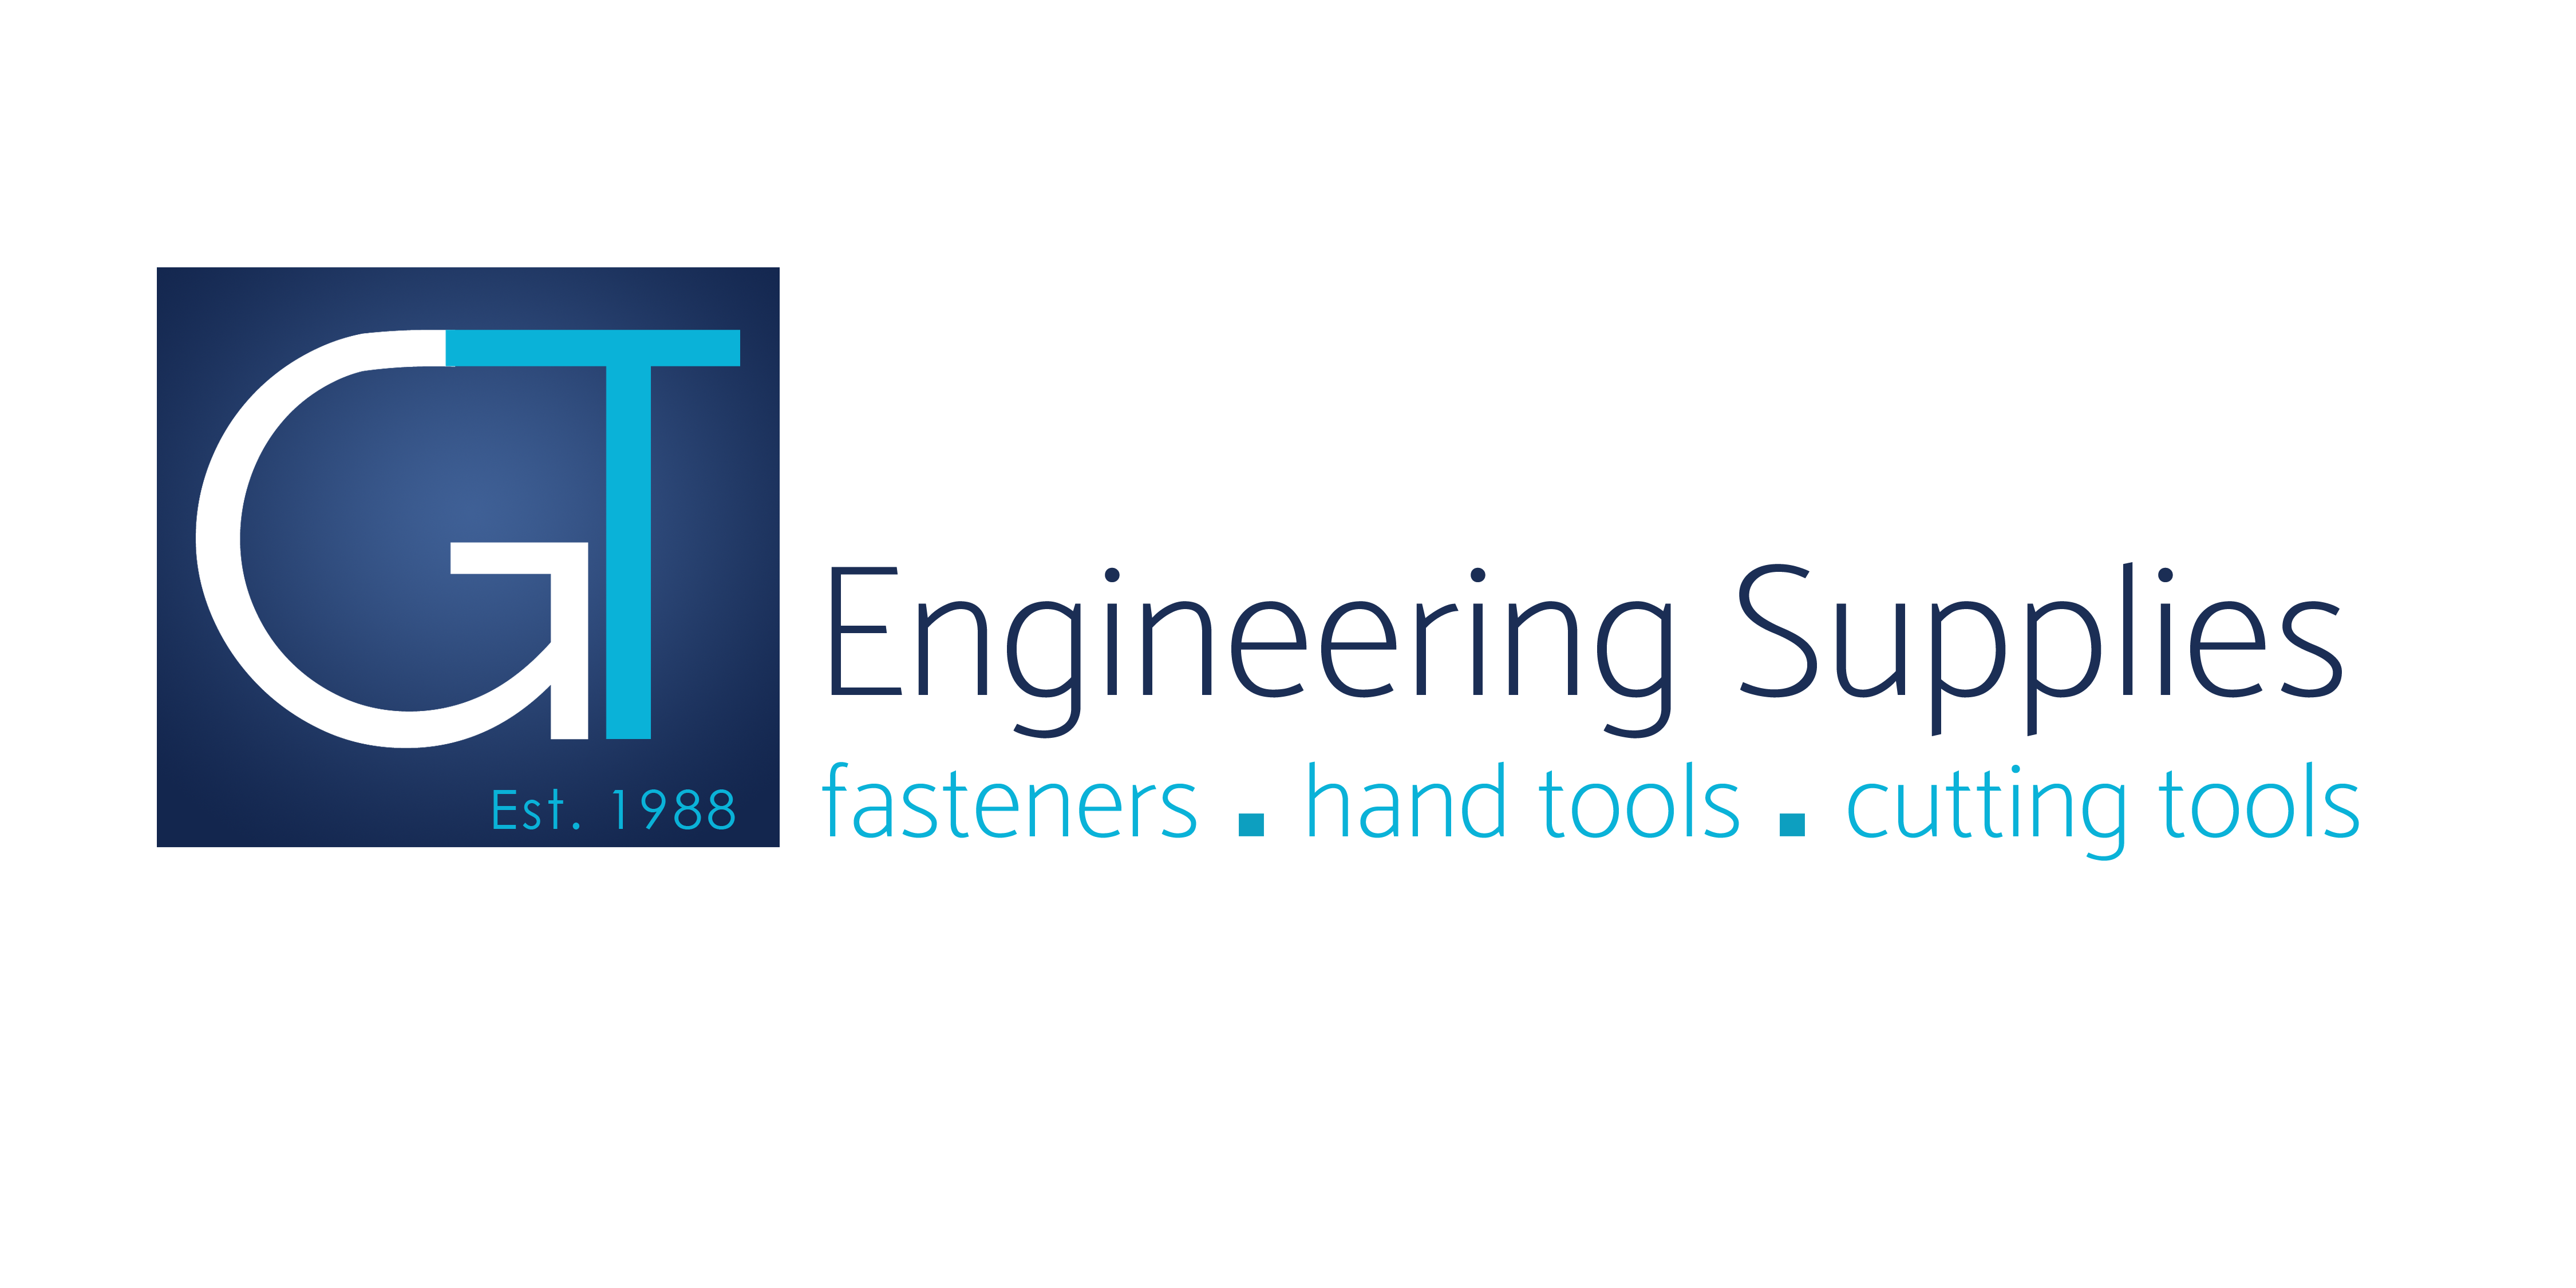 GT Engineering Supplies Ltd